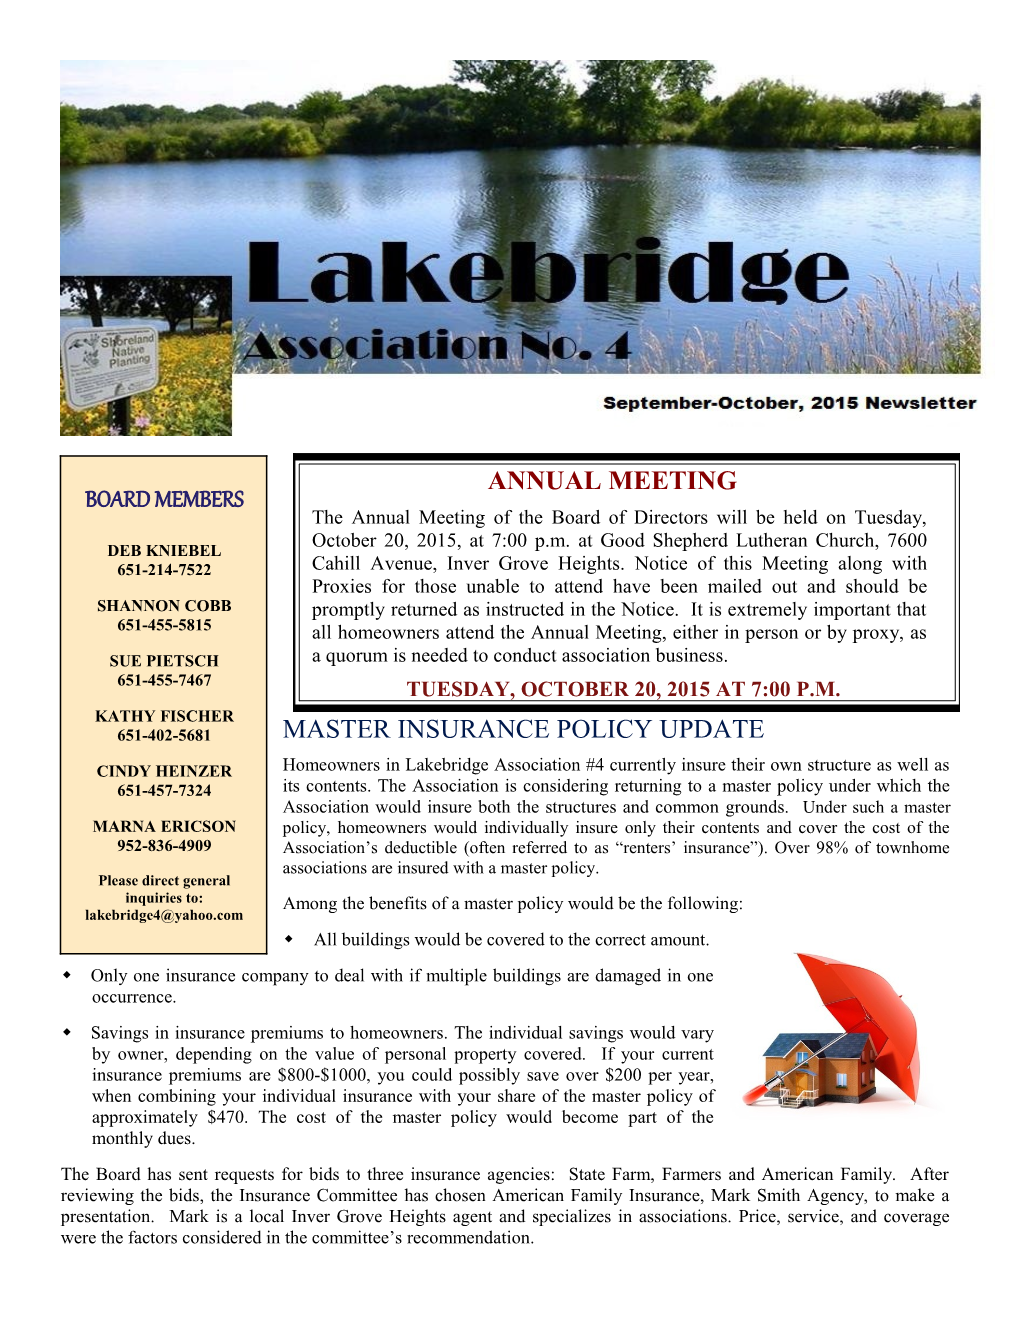 Lakebridge Association #4